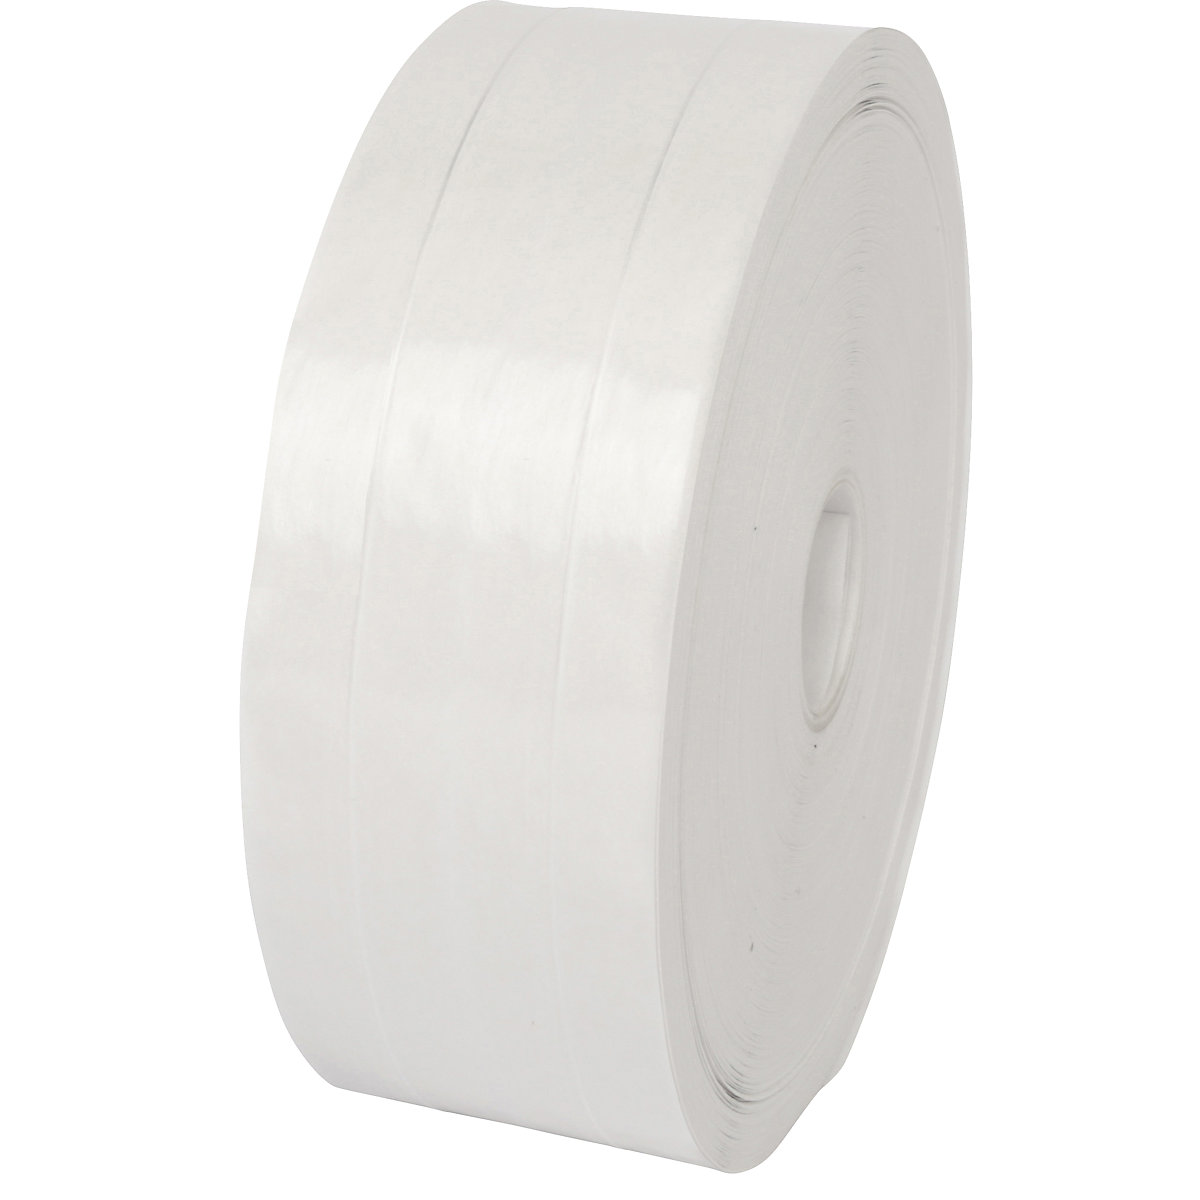 Gummed tape, double fibre reinforced, pack of 12 rolls, white, tape width 60 mm-1